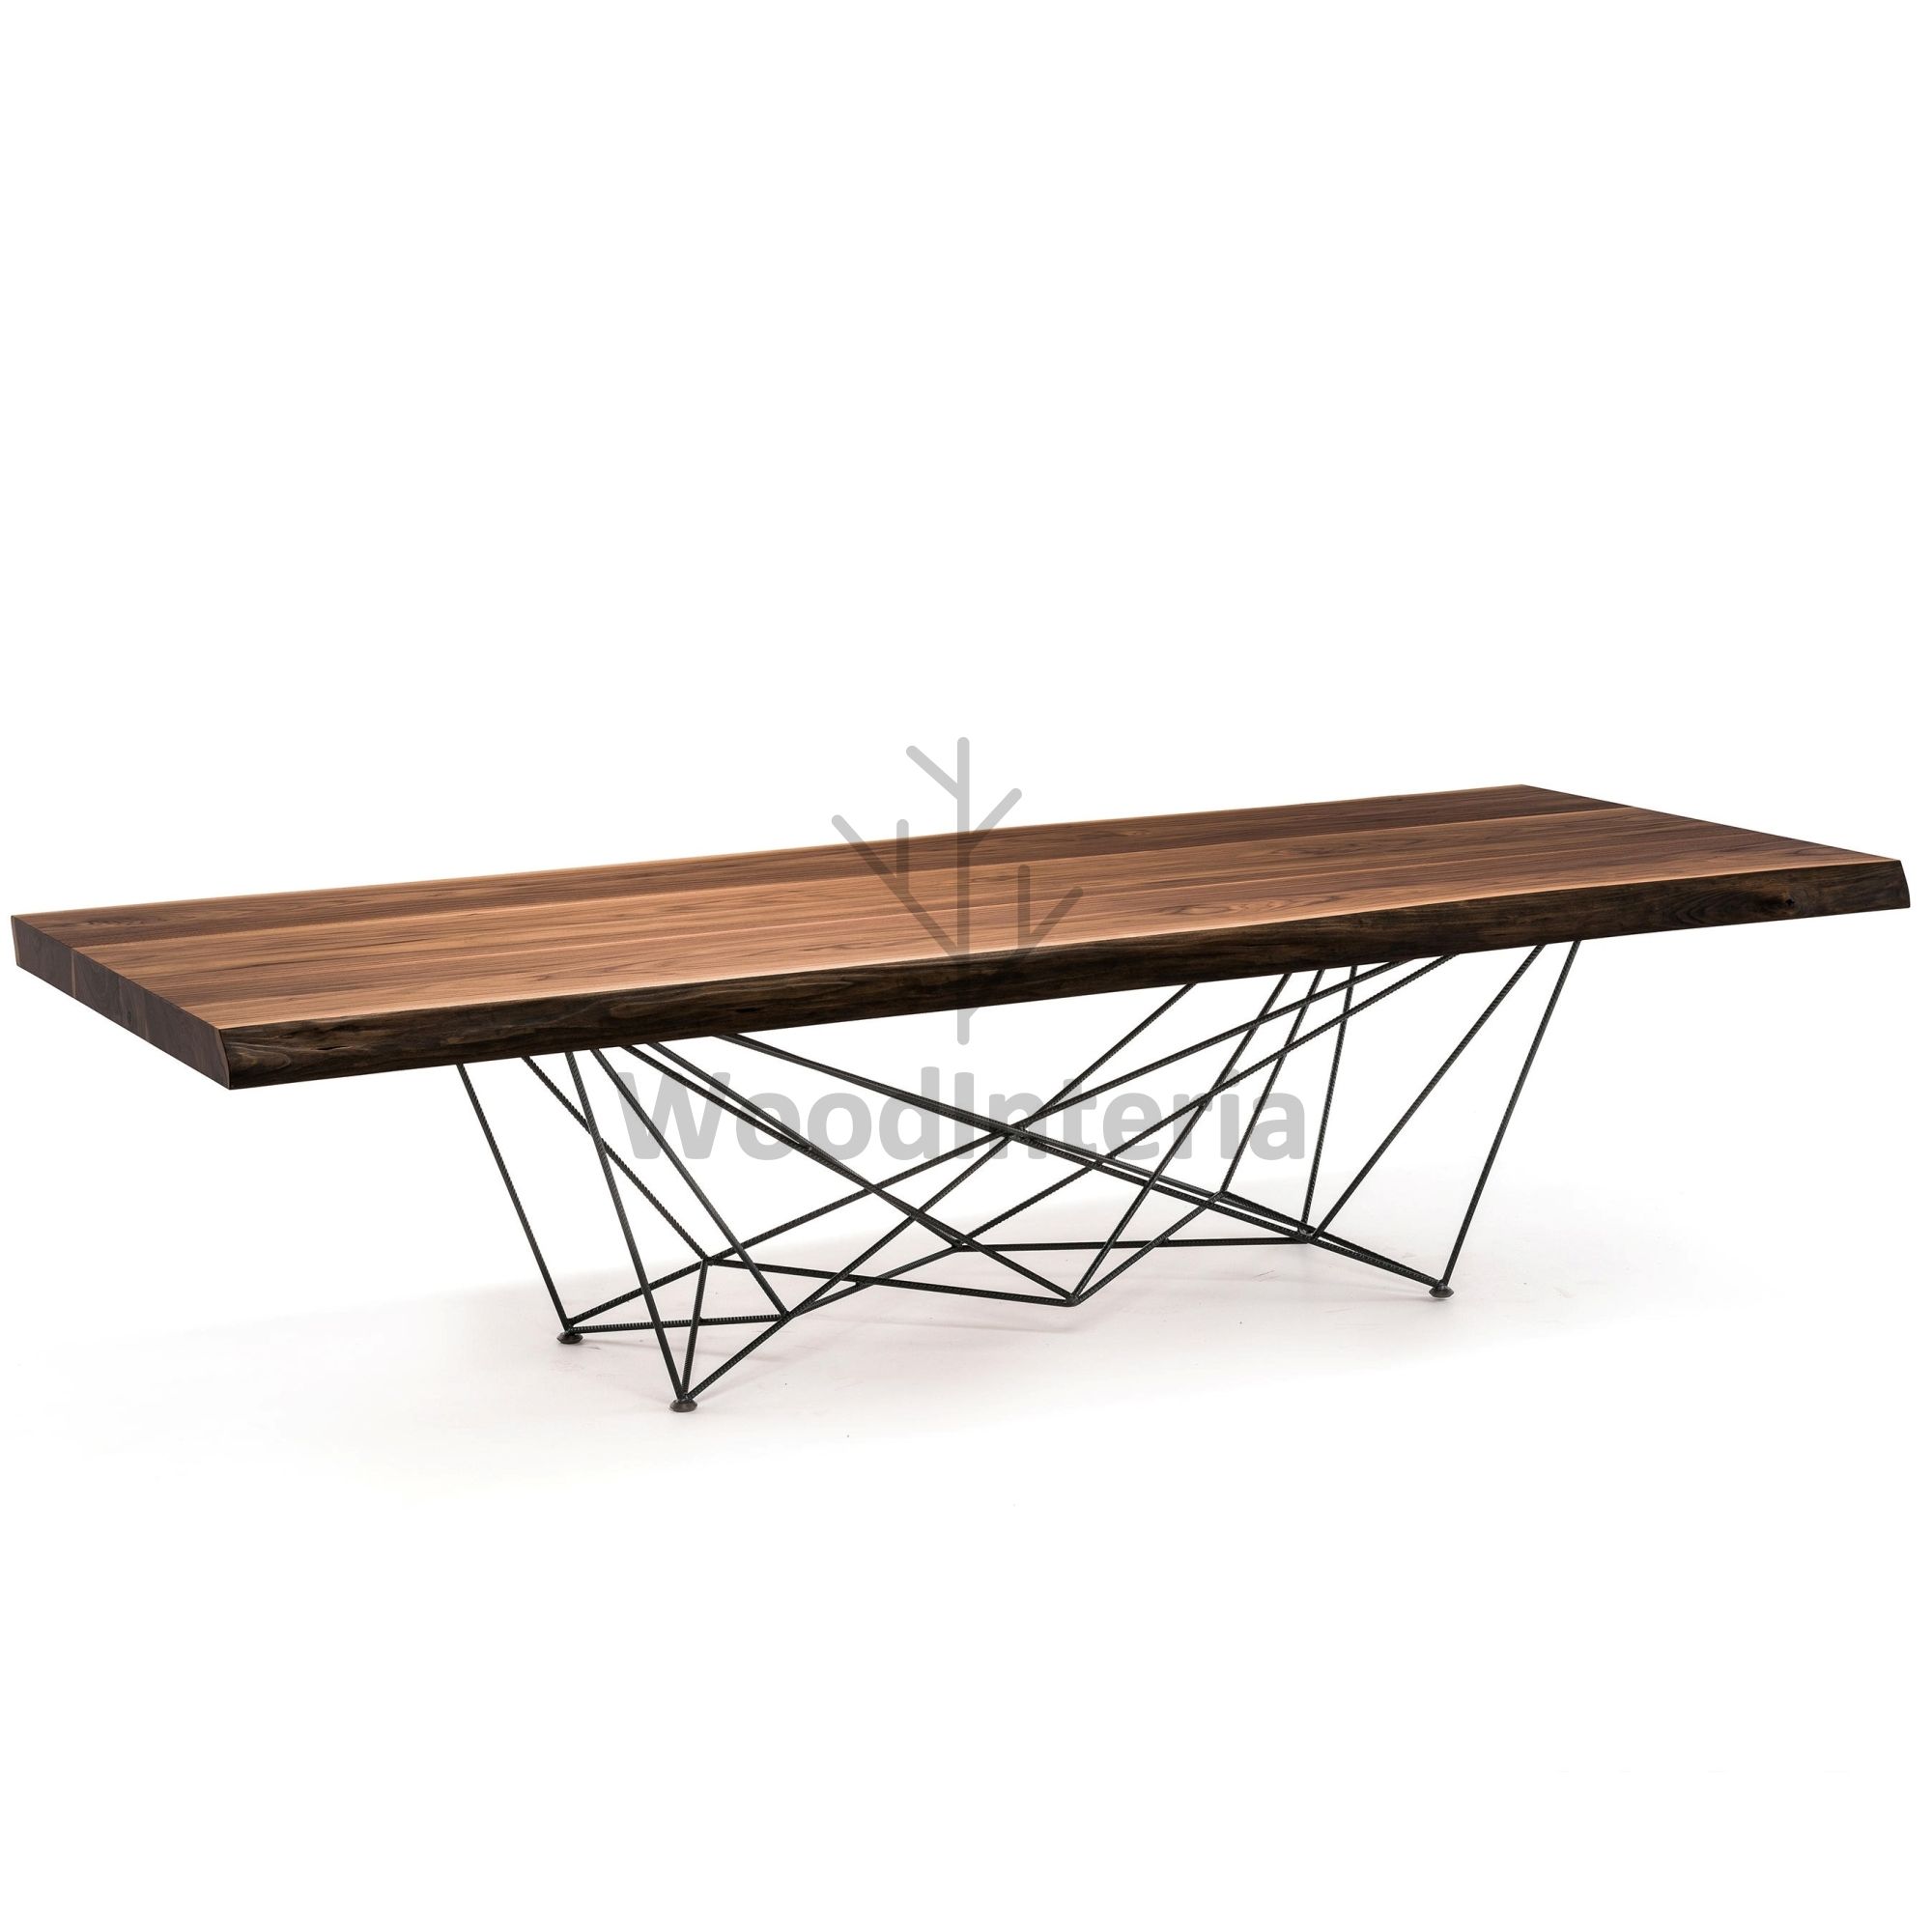 фото обеденный стол yukon dinning table в интерьере лофт эко | WoodInteria